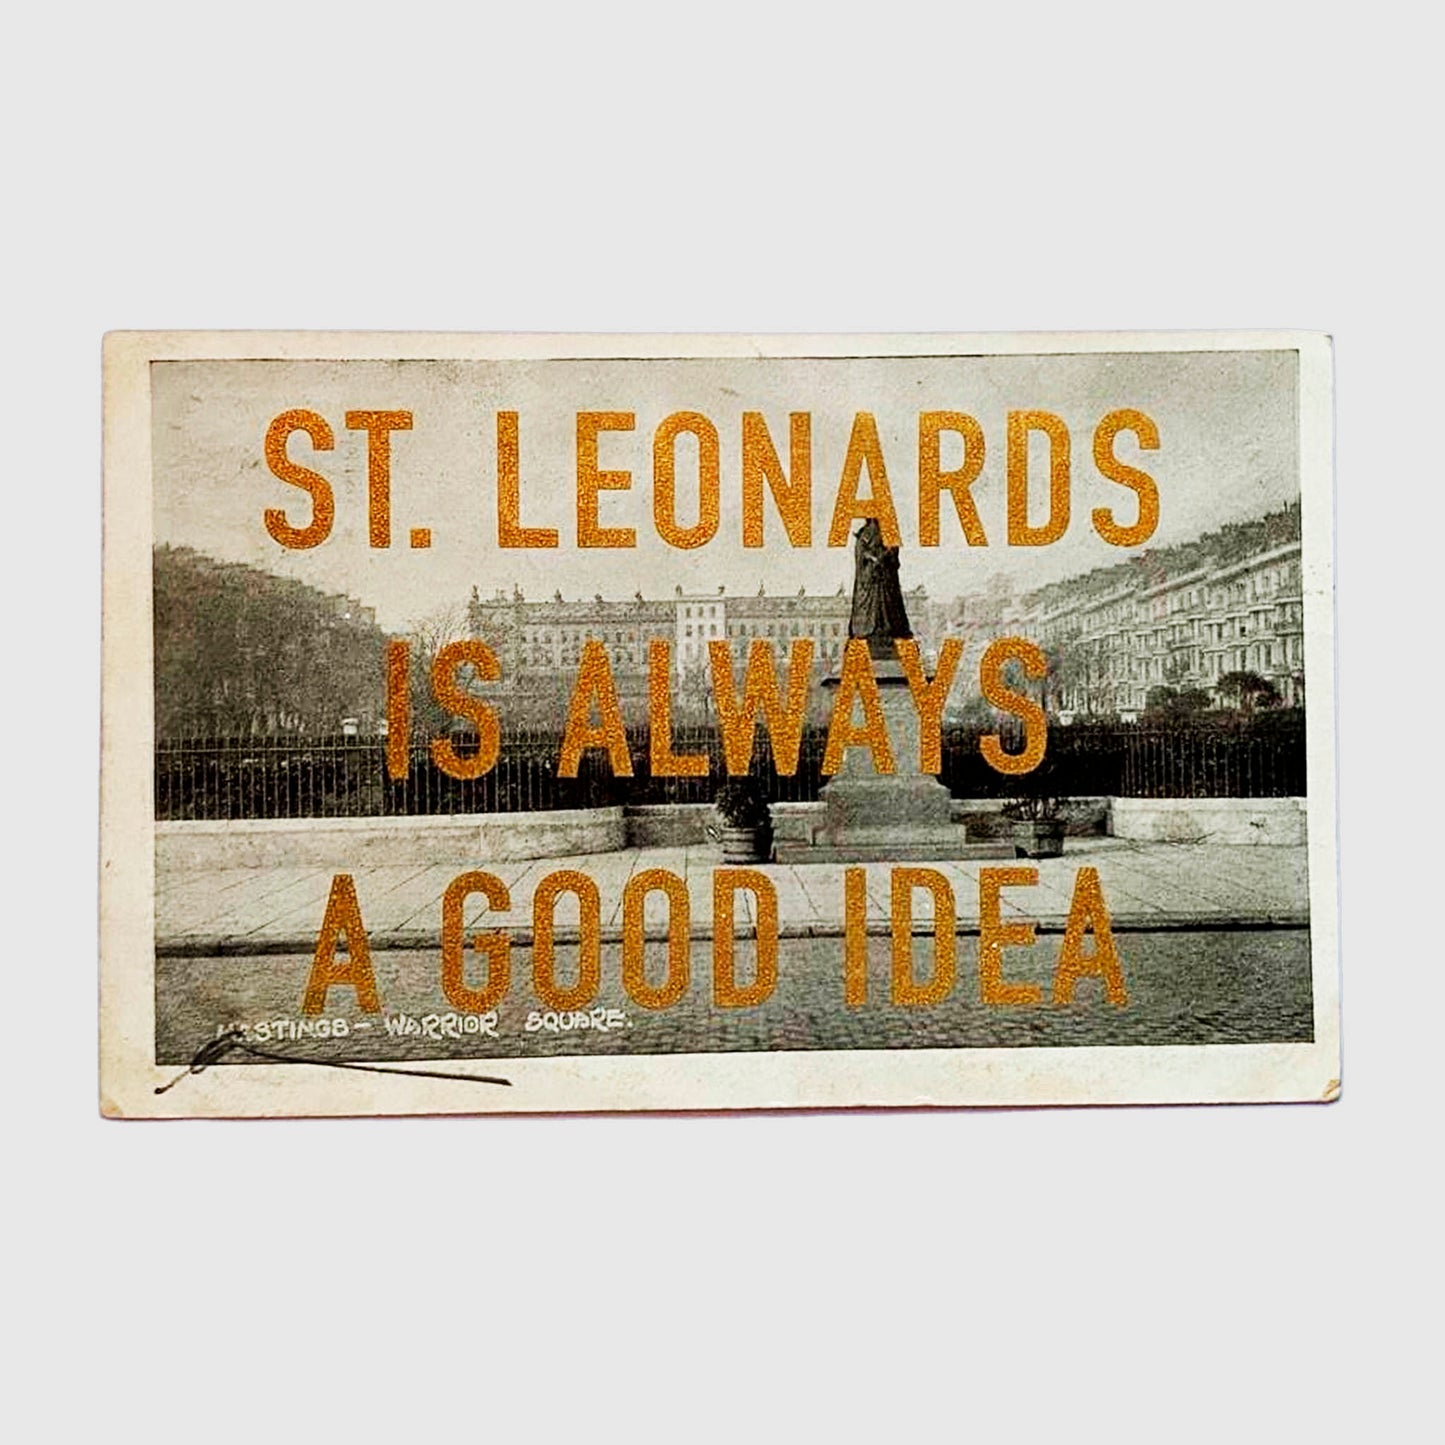 "St Leonards is Always A Good Idea"